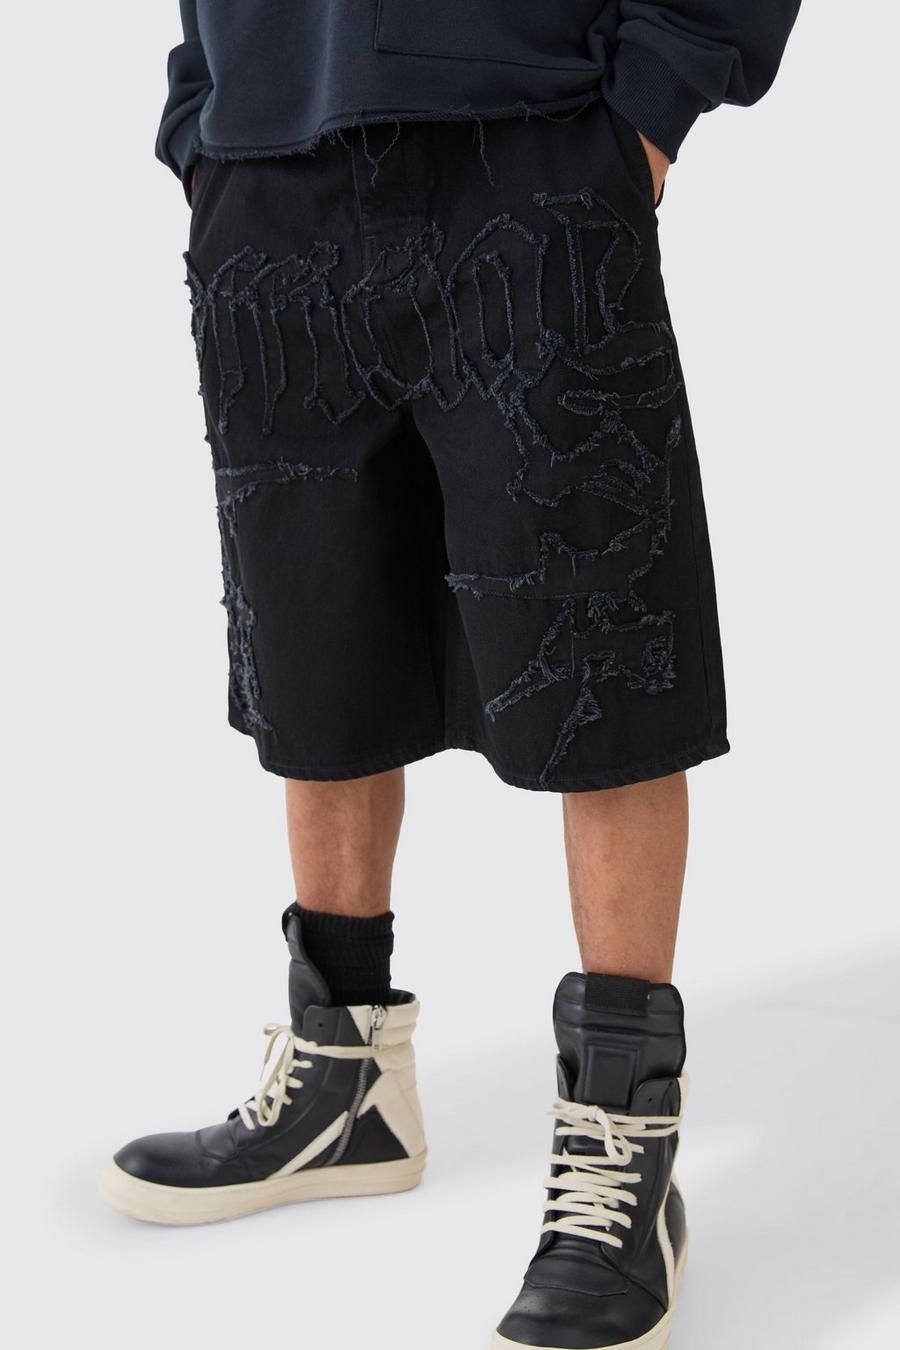 Official Self Fabric Applique Denim Jorts In Black